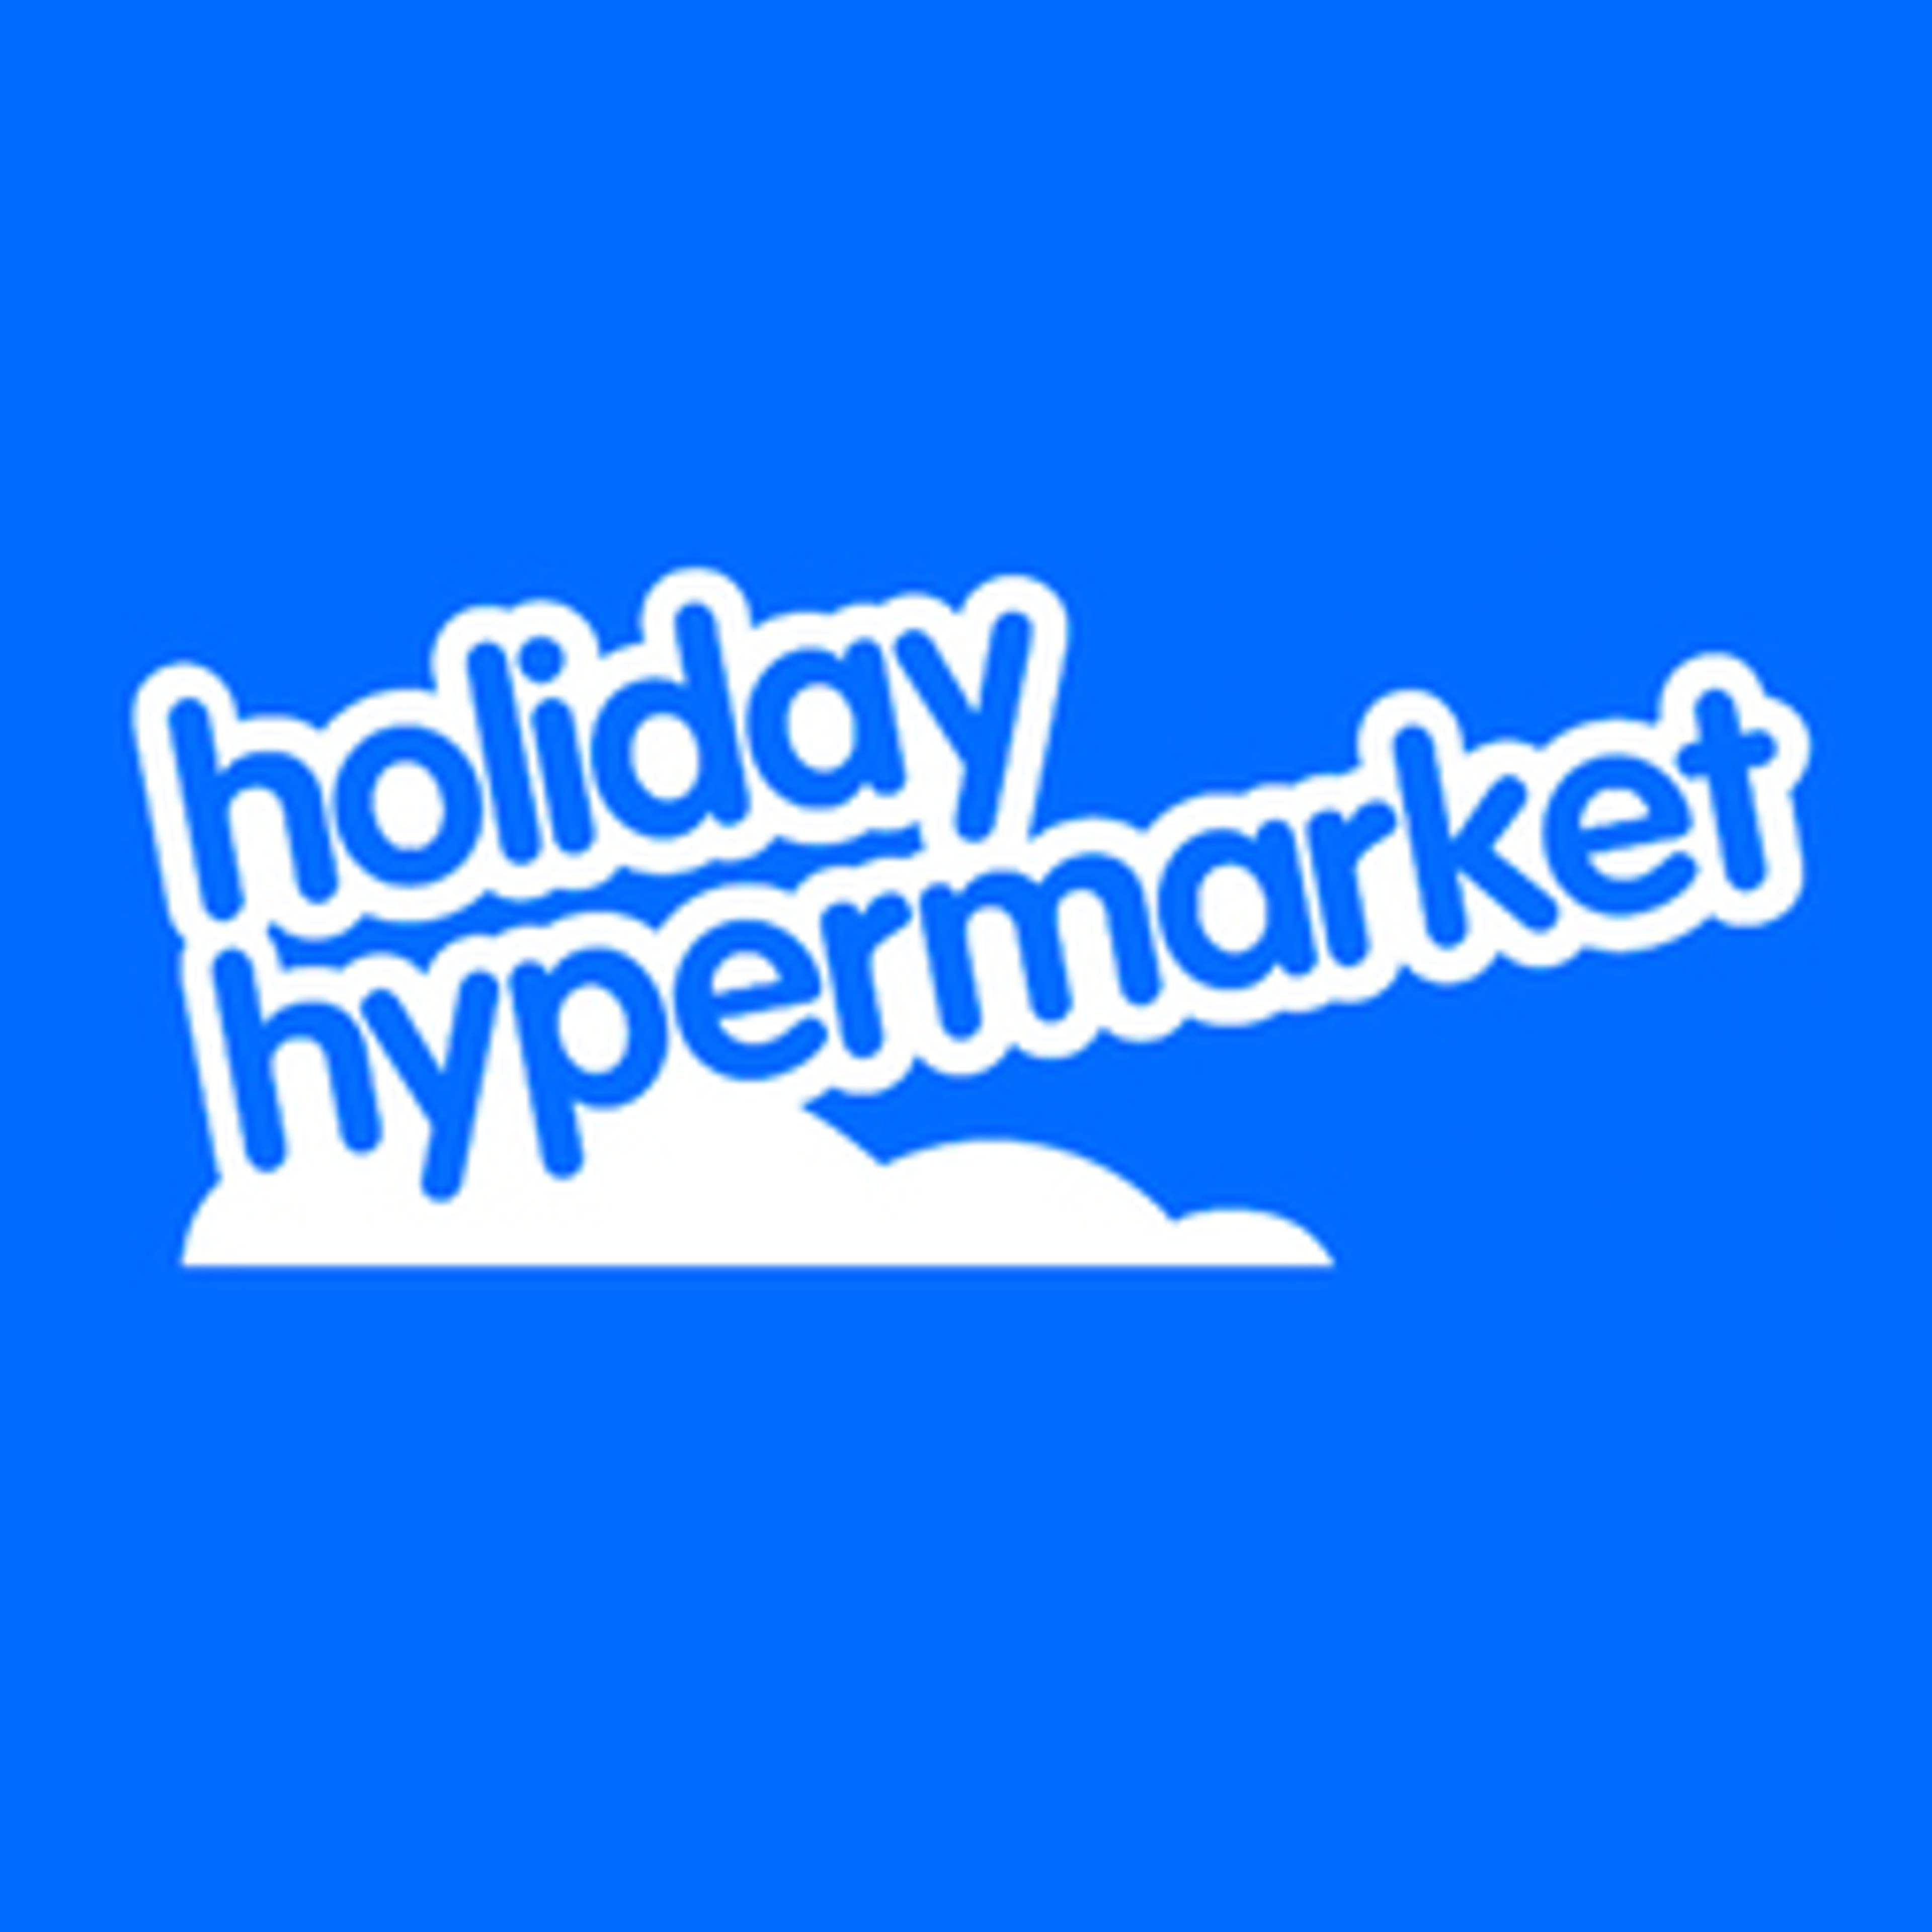  Holiday Hypermarket 